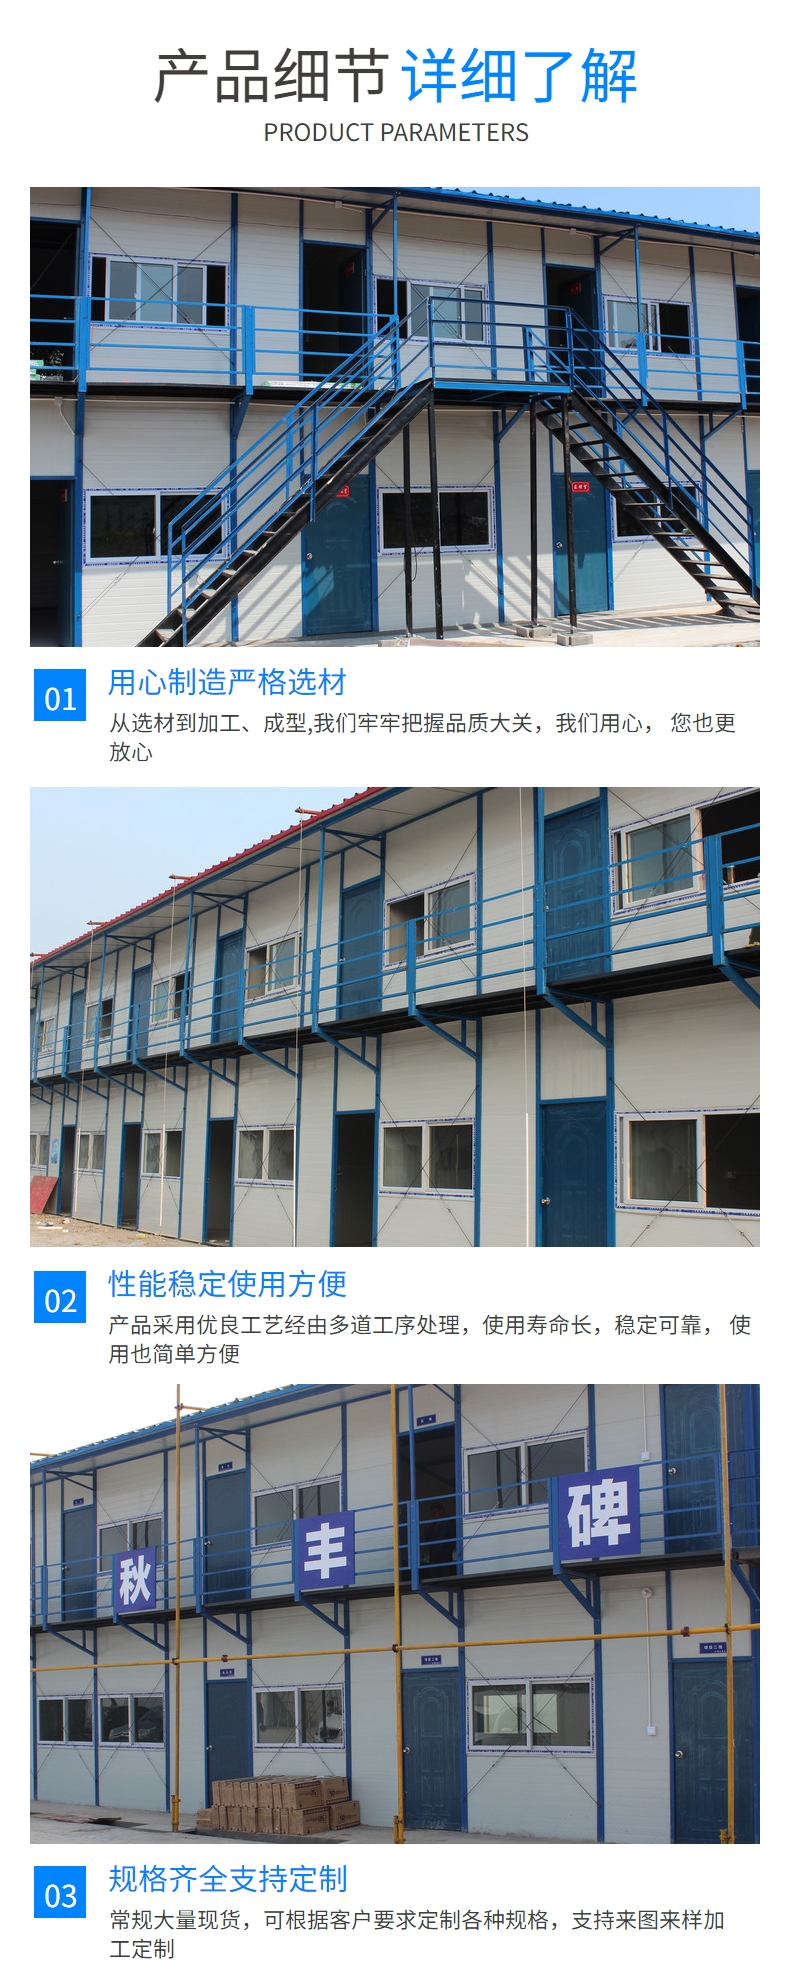 Zhishang insulation foam splicing room prefabricated simple room incubator light steel room